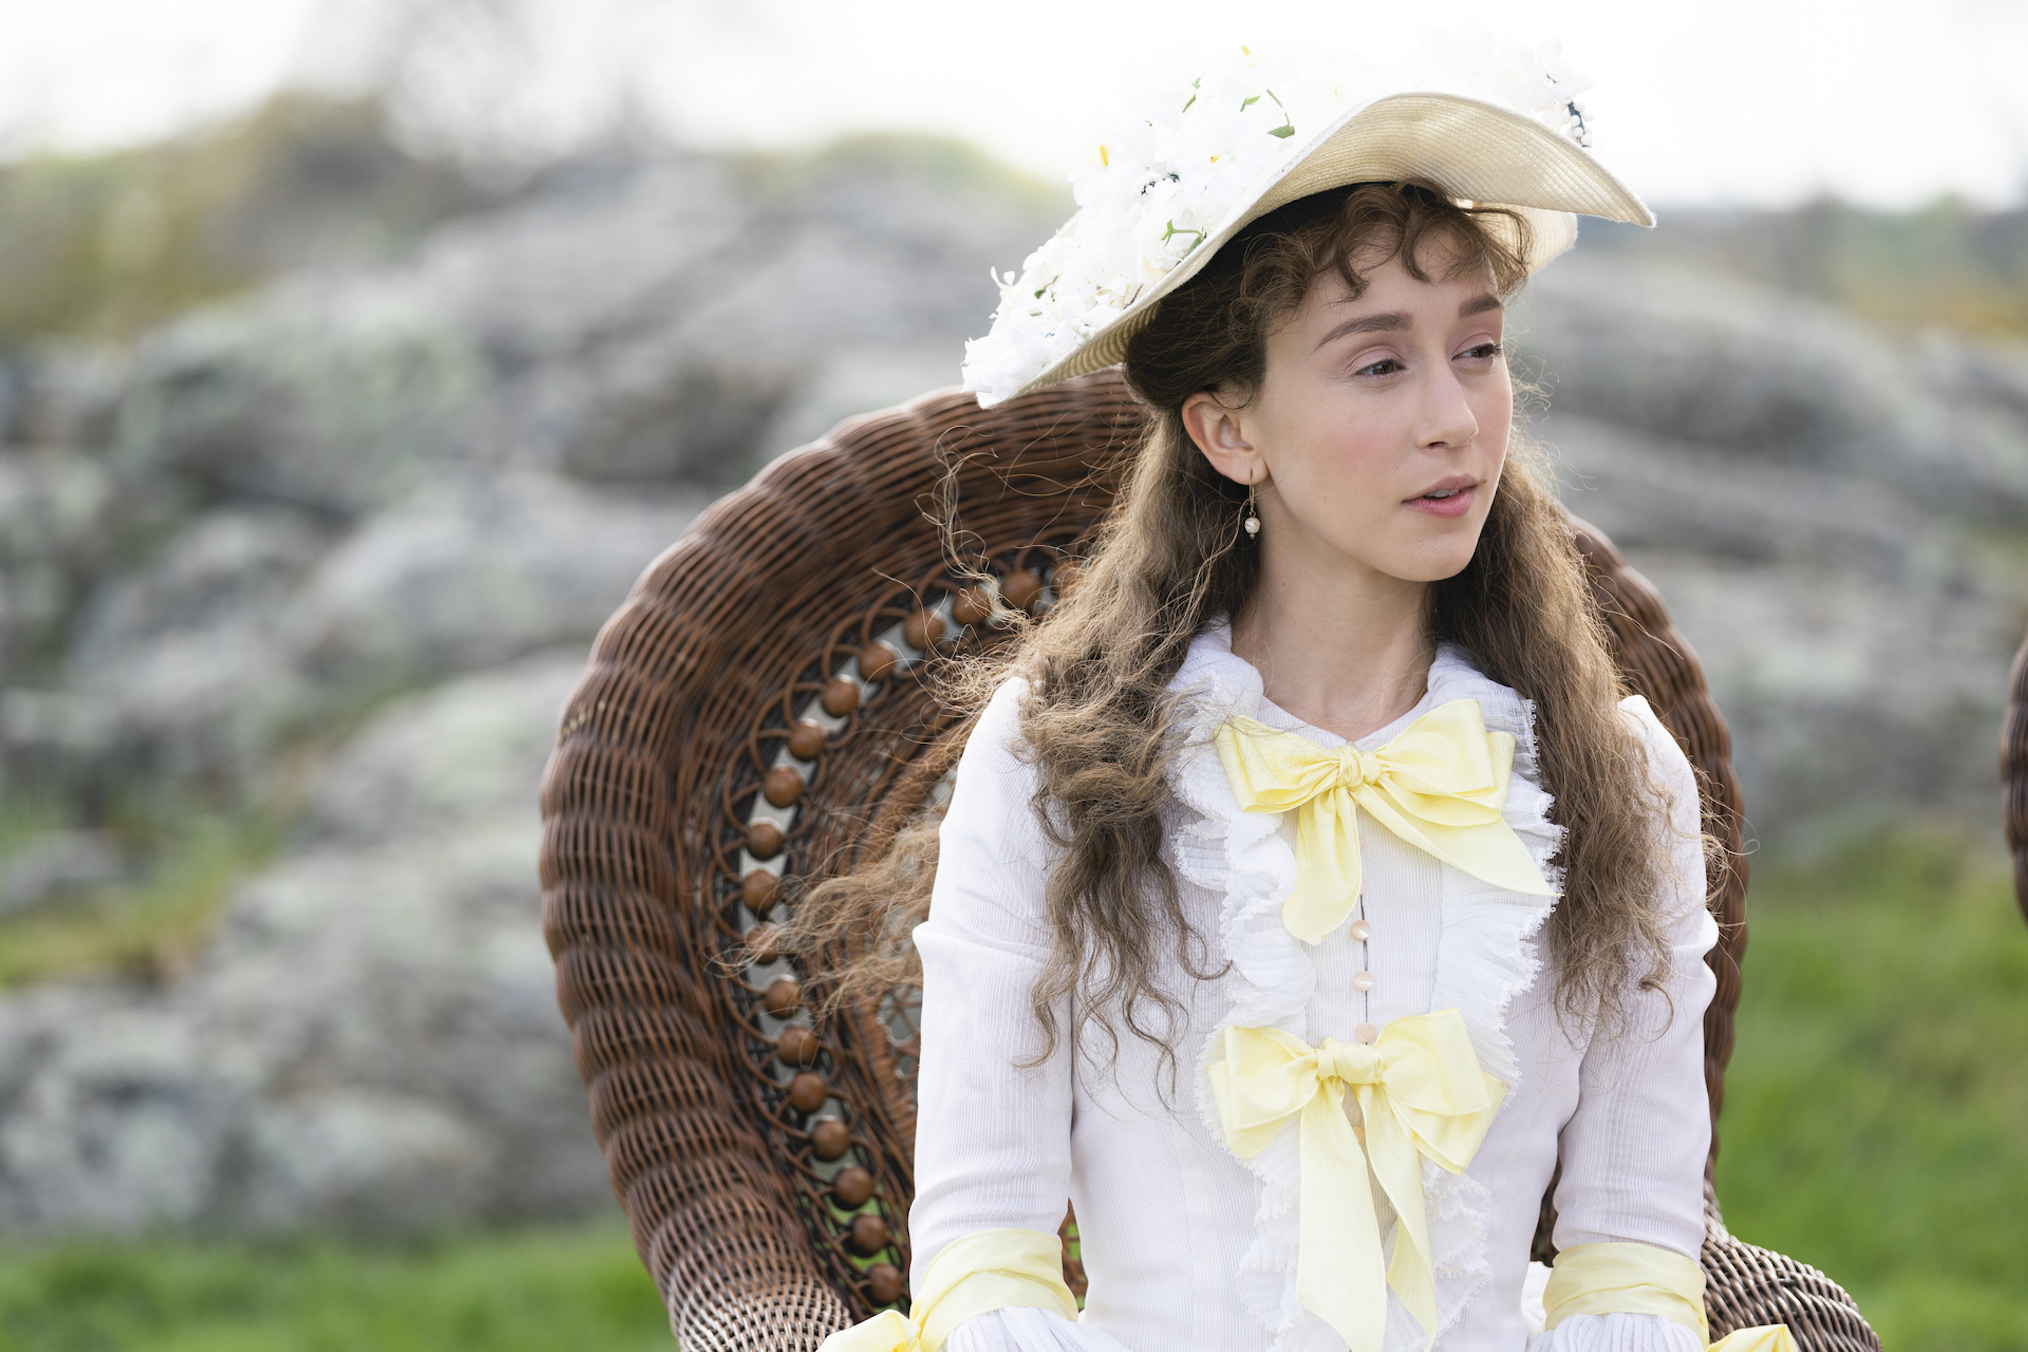 Taissa Farmiga in 'The Gilded Age' Season 1